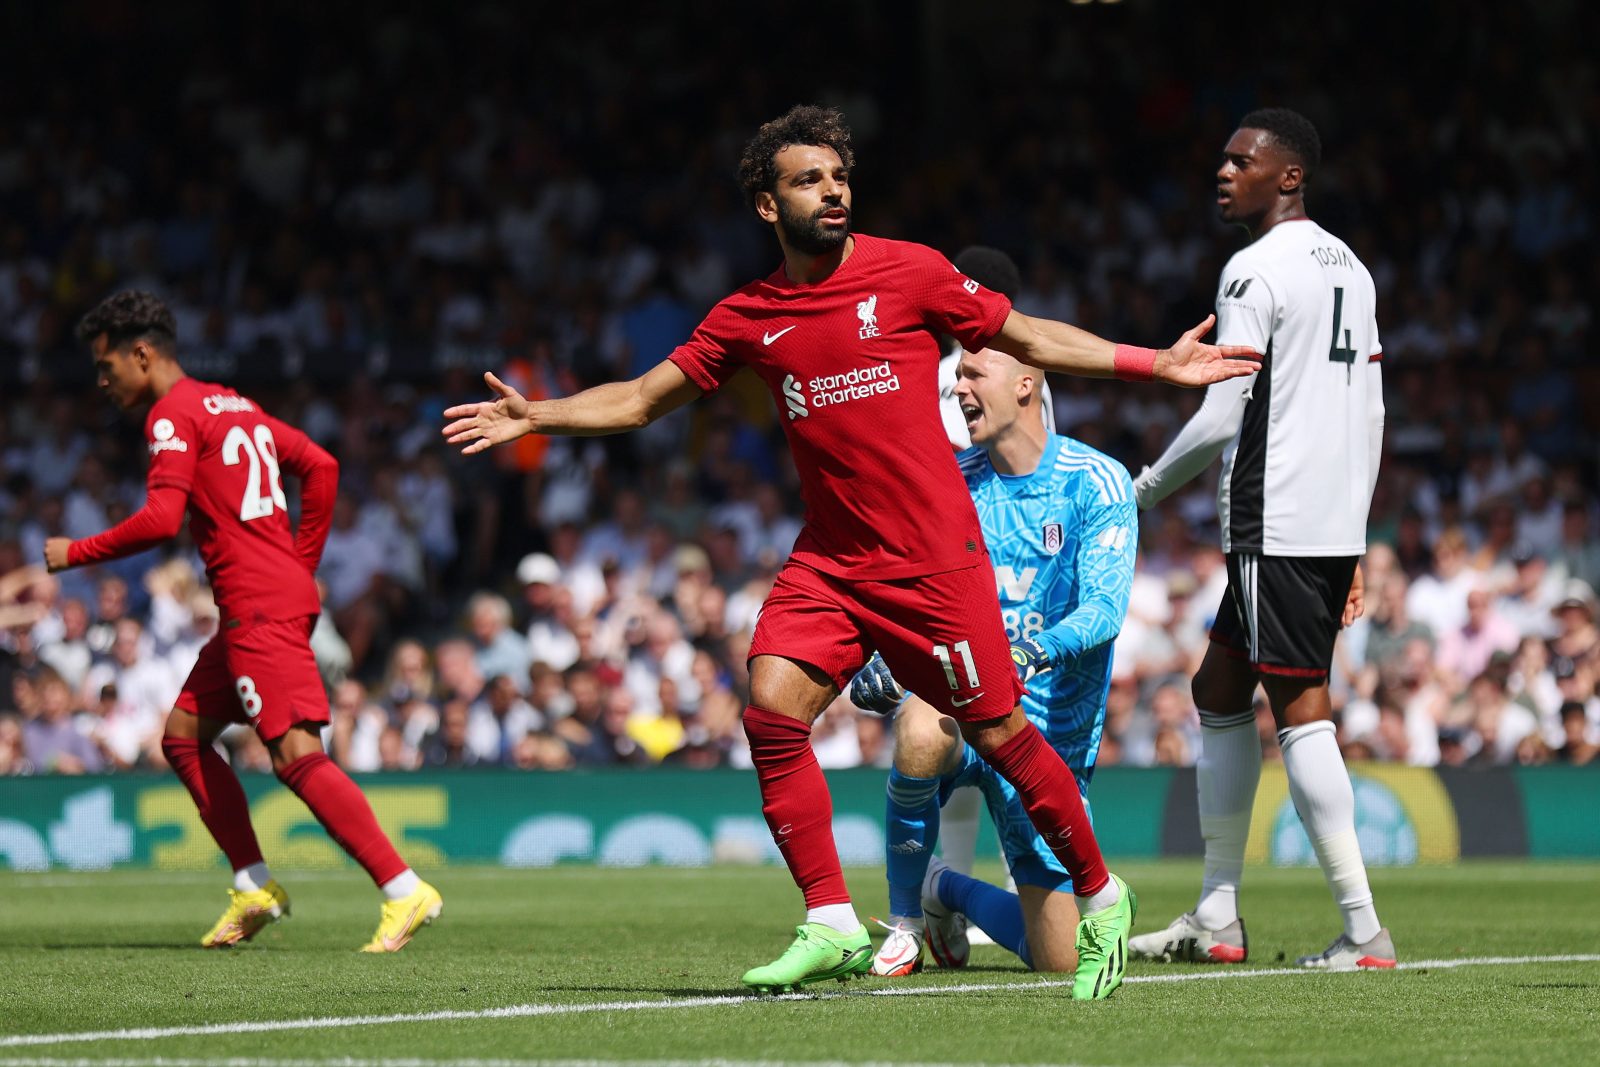 Salah saves Liverpool